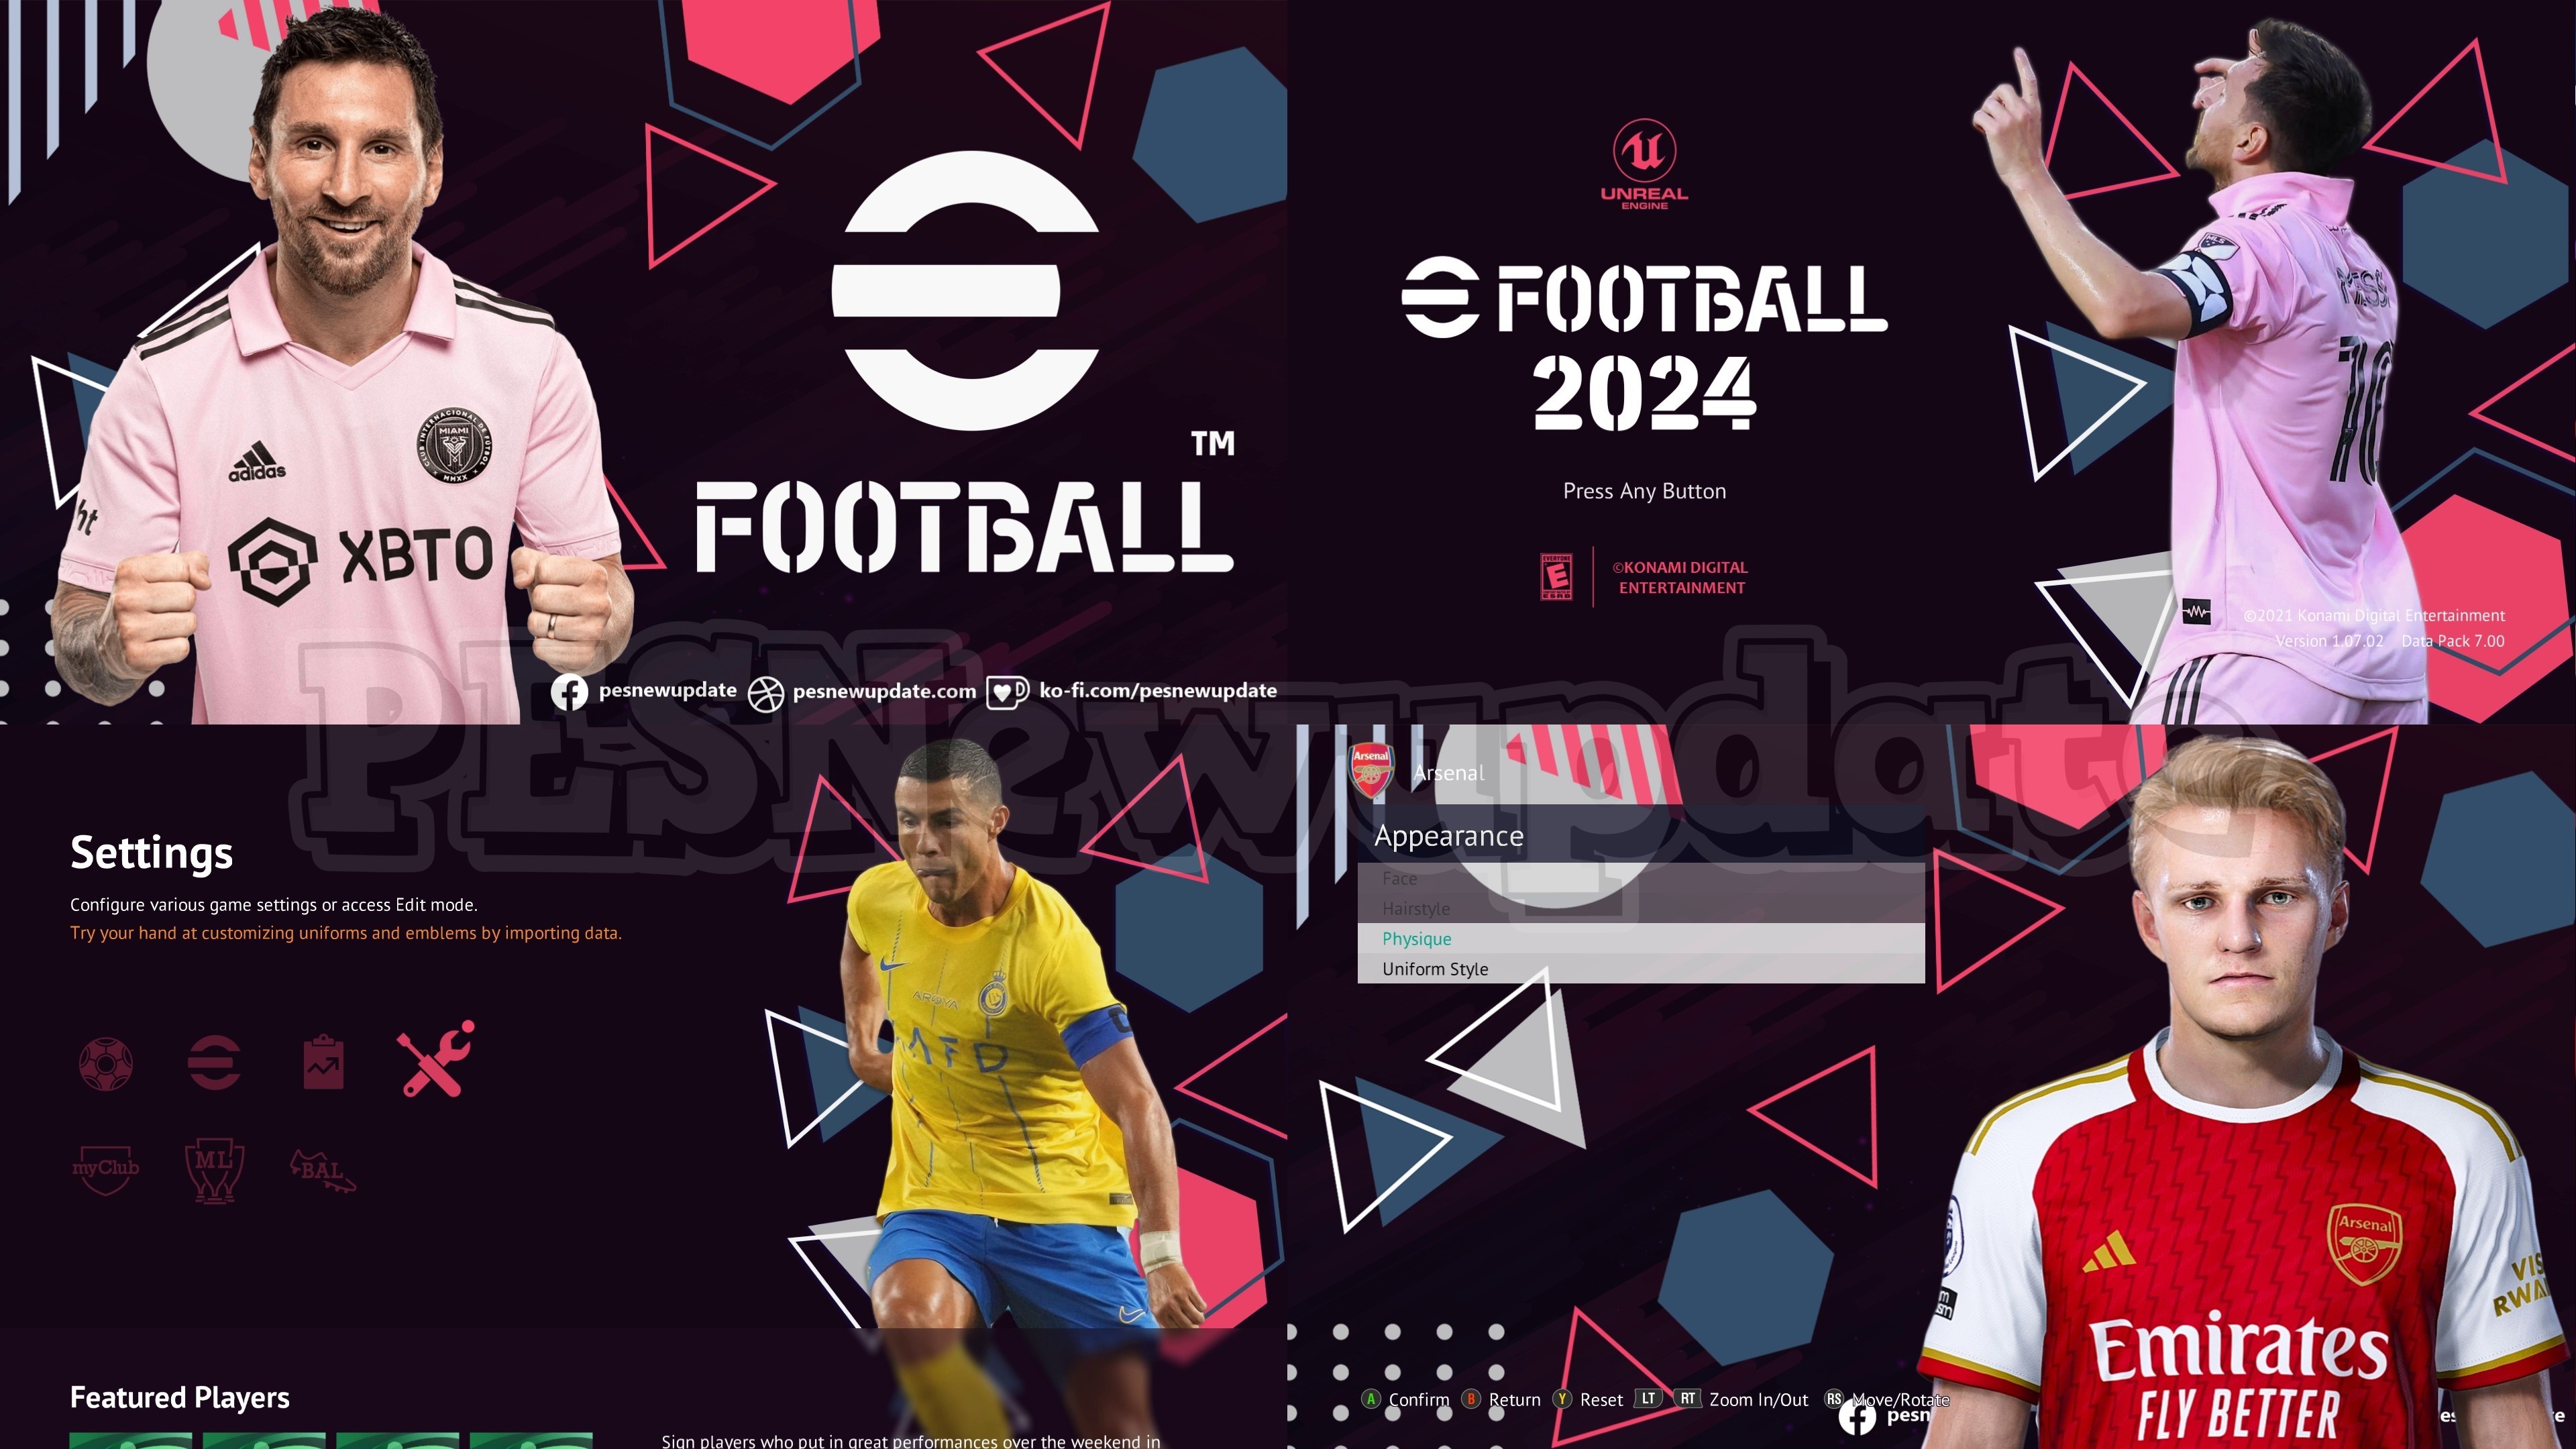 PES 2021 Menu eFootball 2022 SEASON 1 by PESNewupdate ~